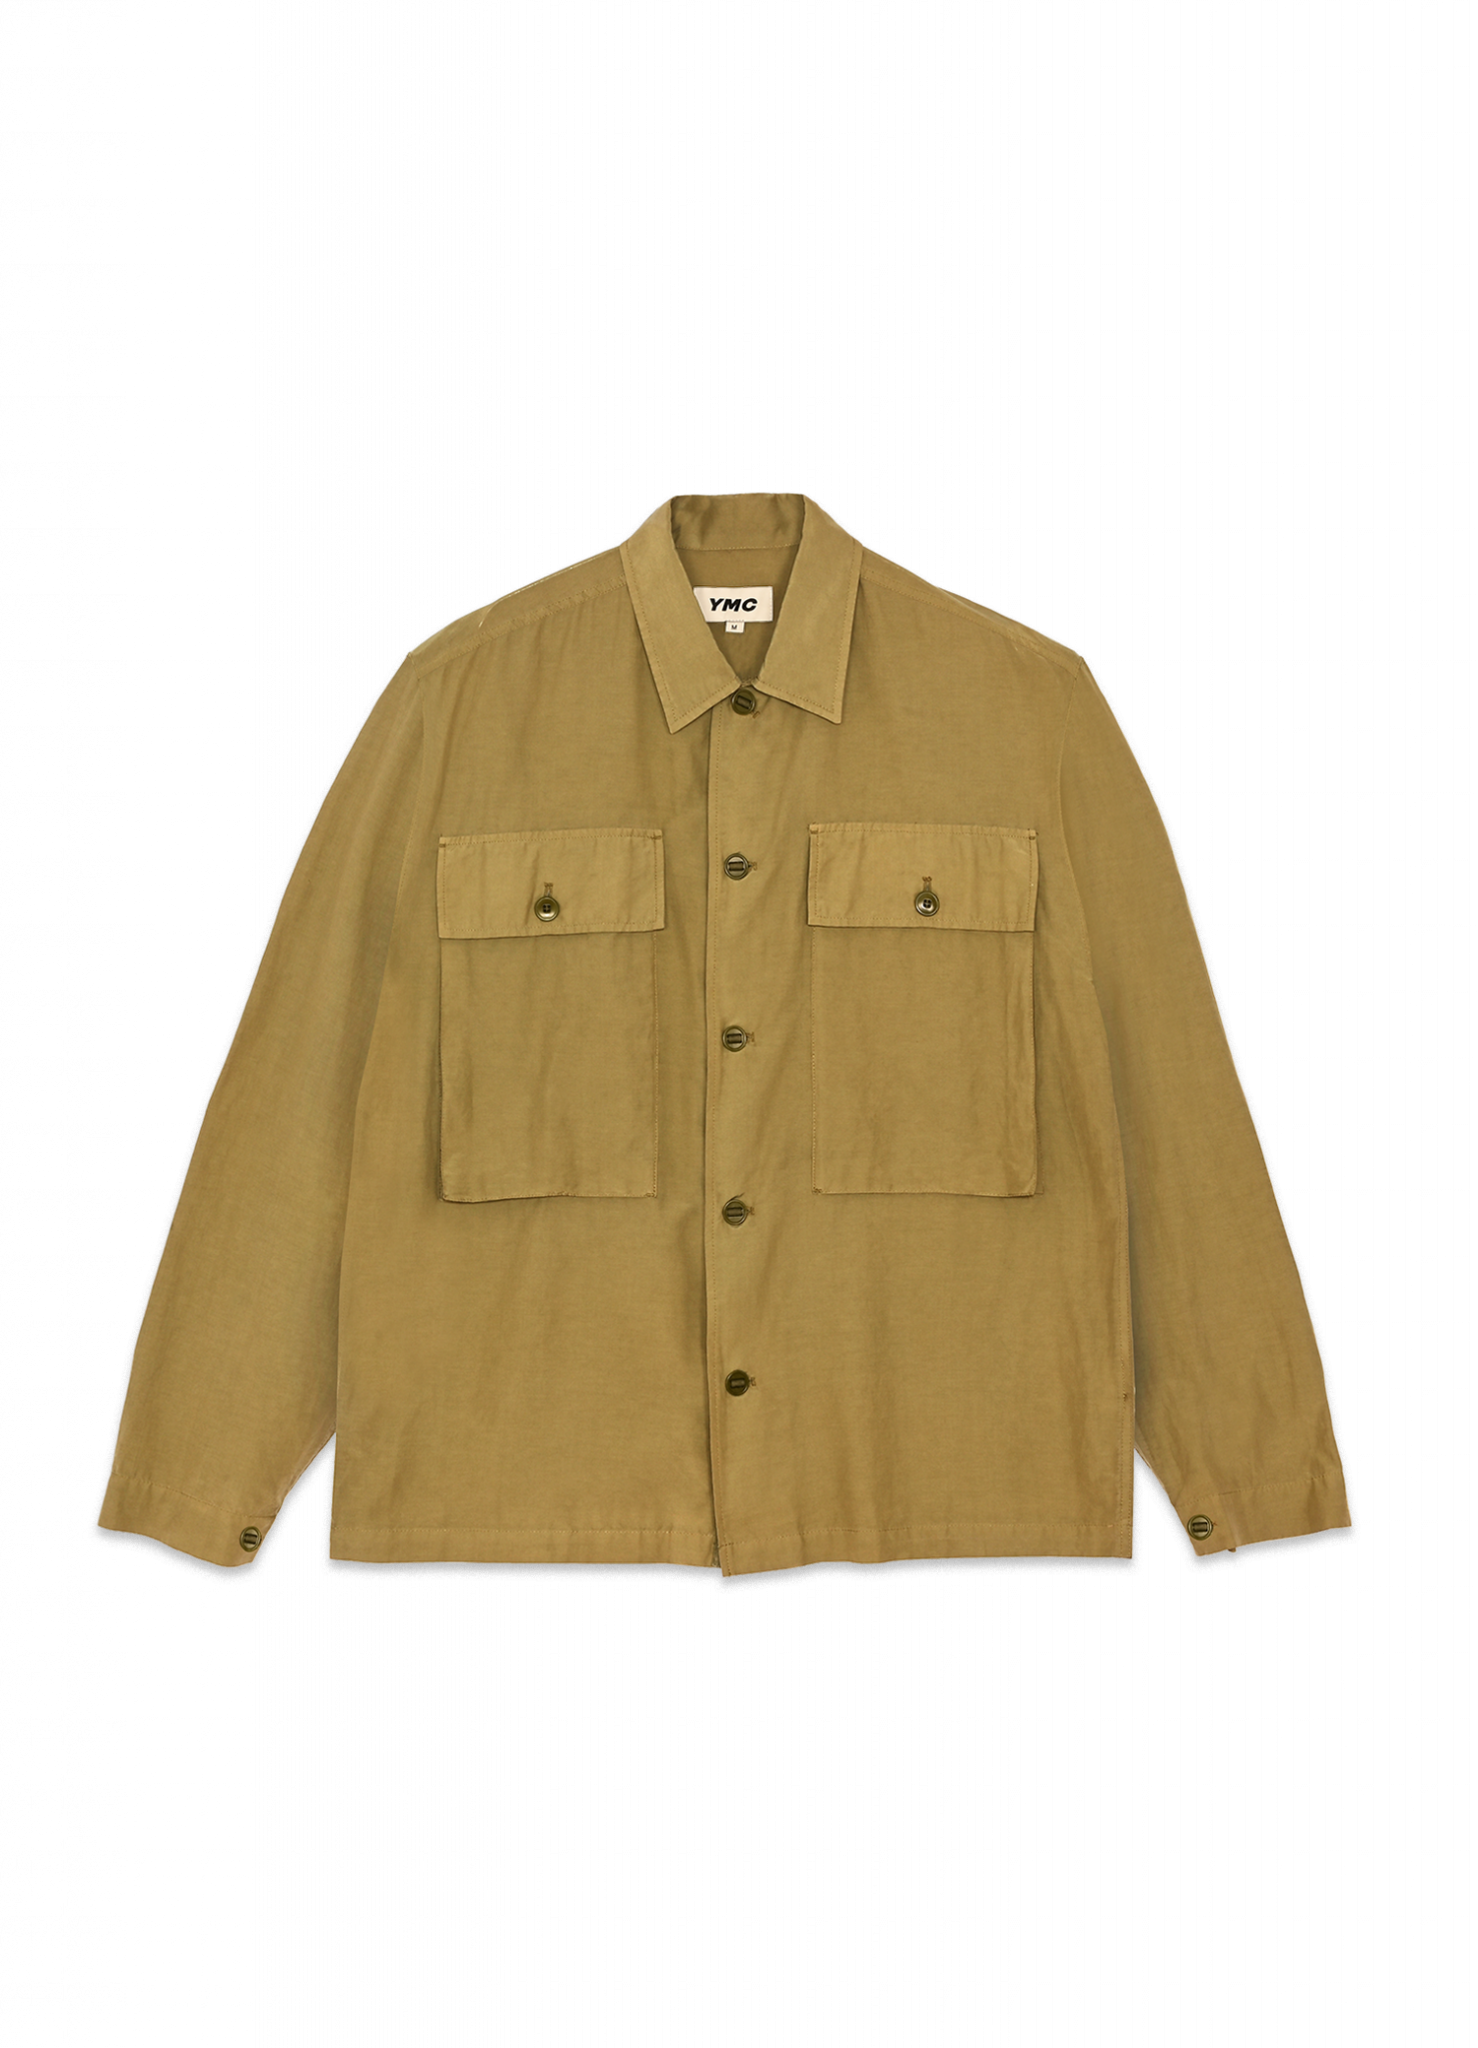 YMC Military Shirt - Olive